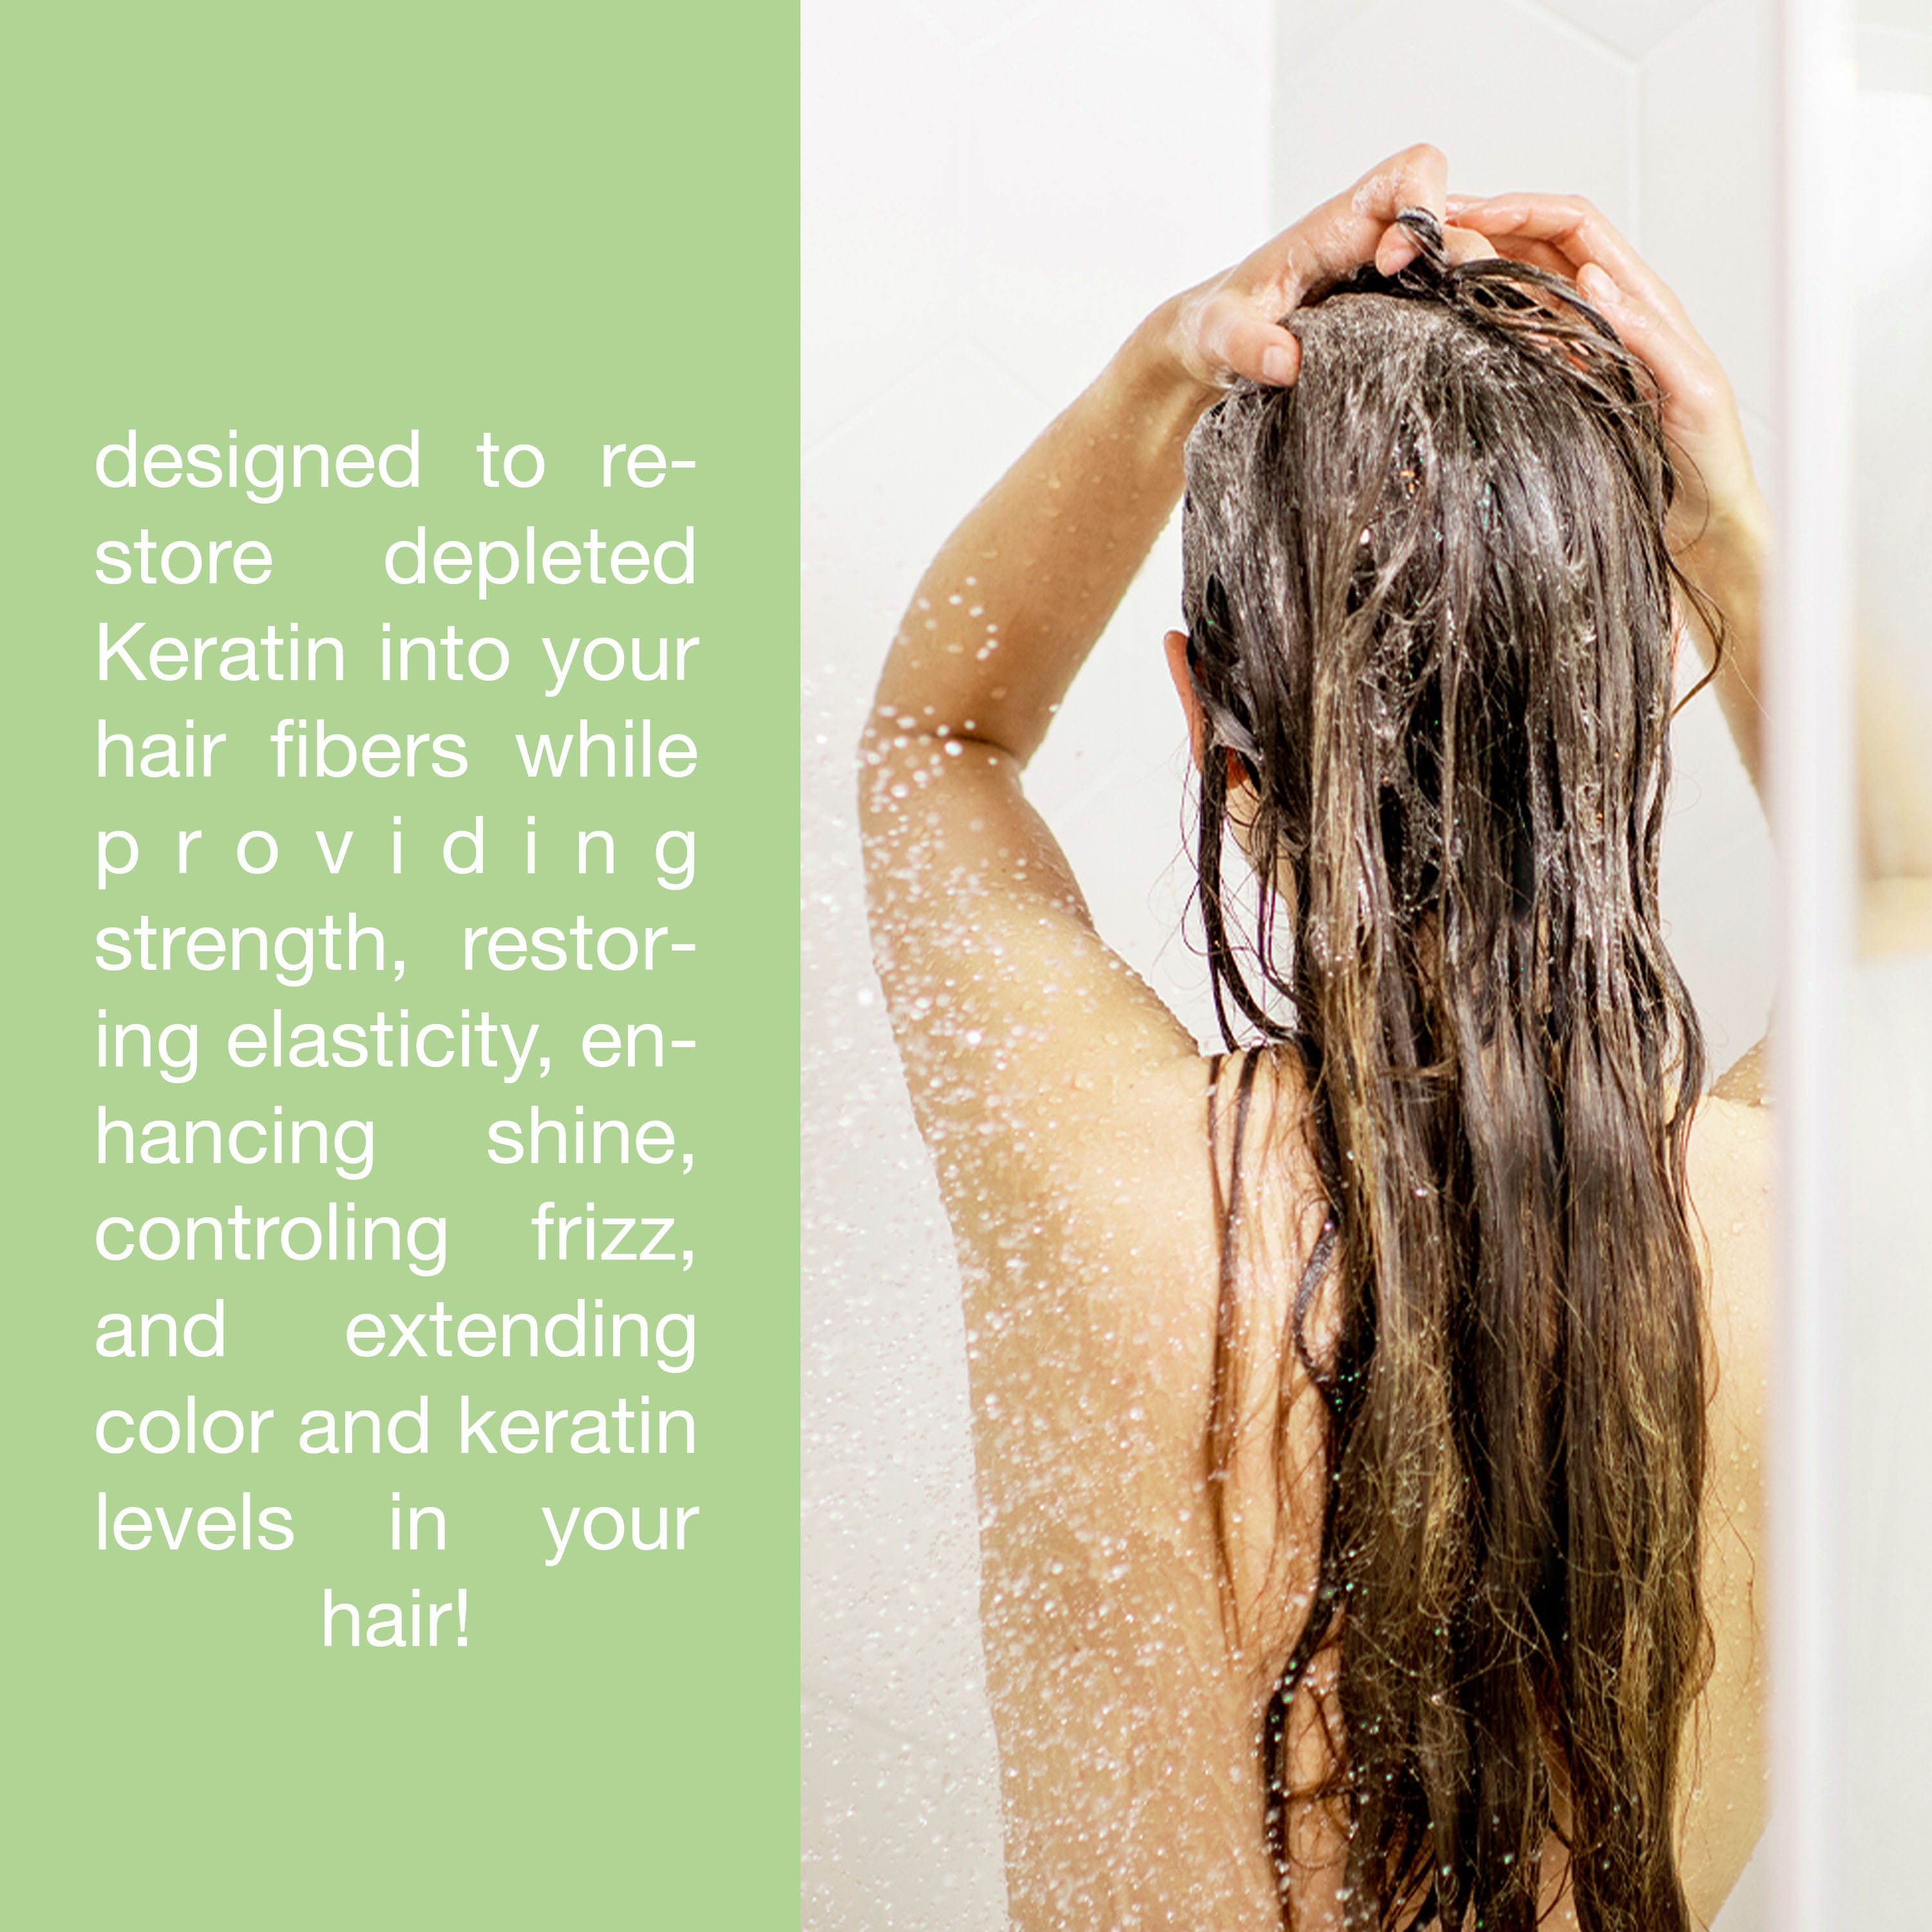 Tropical Keratin Replenishing Shampoo